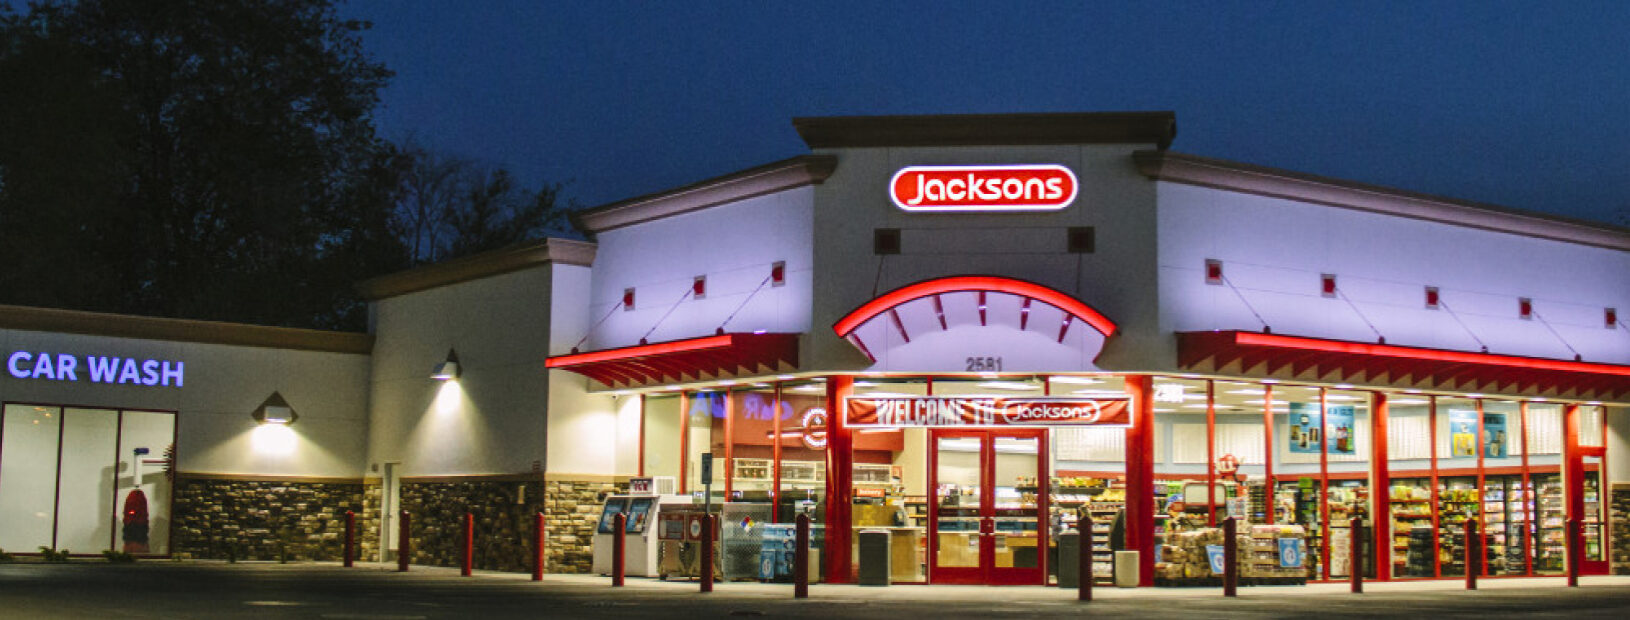 Jacksons food stores convenience retail location